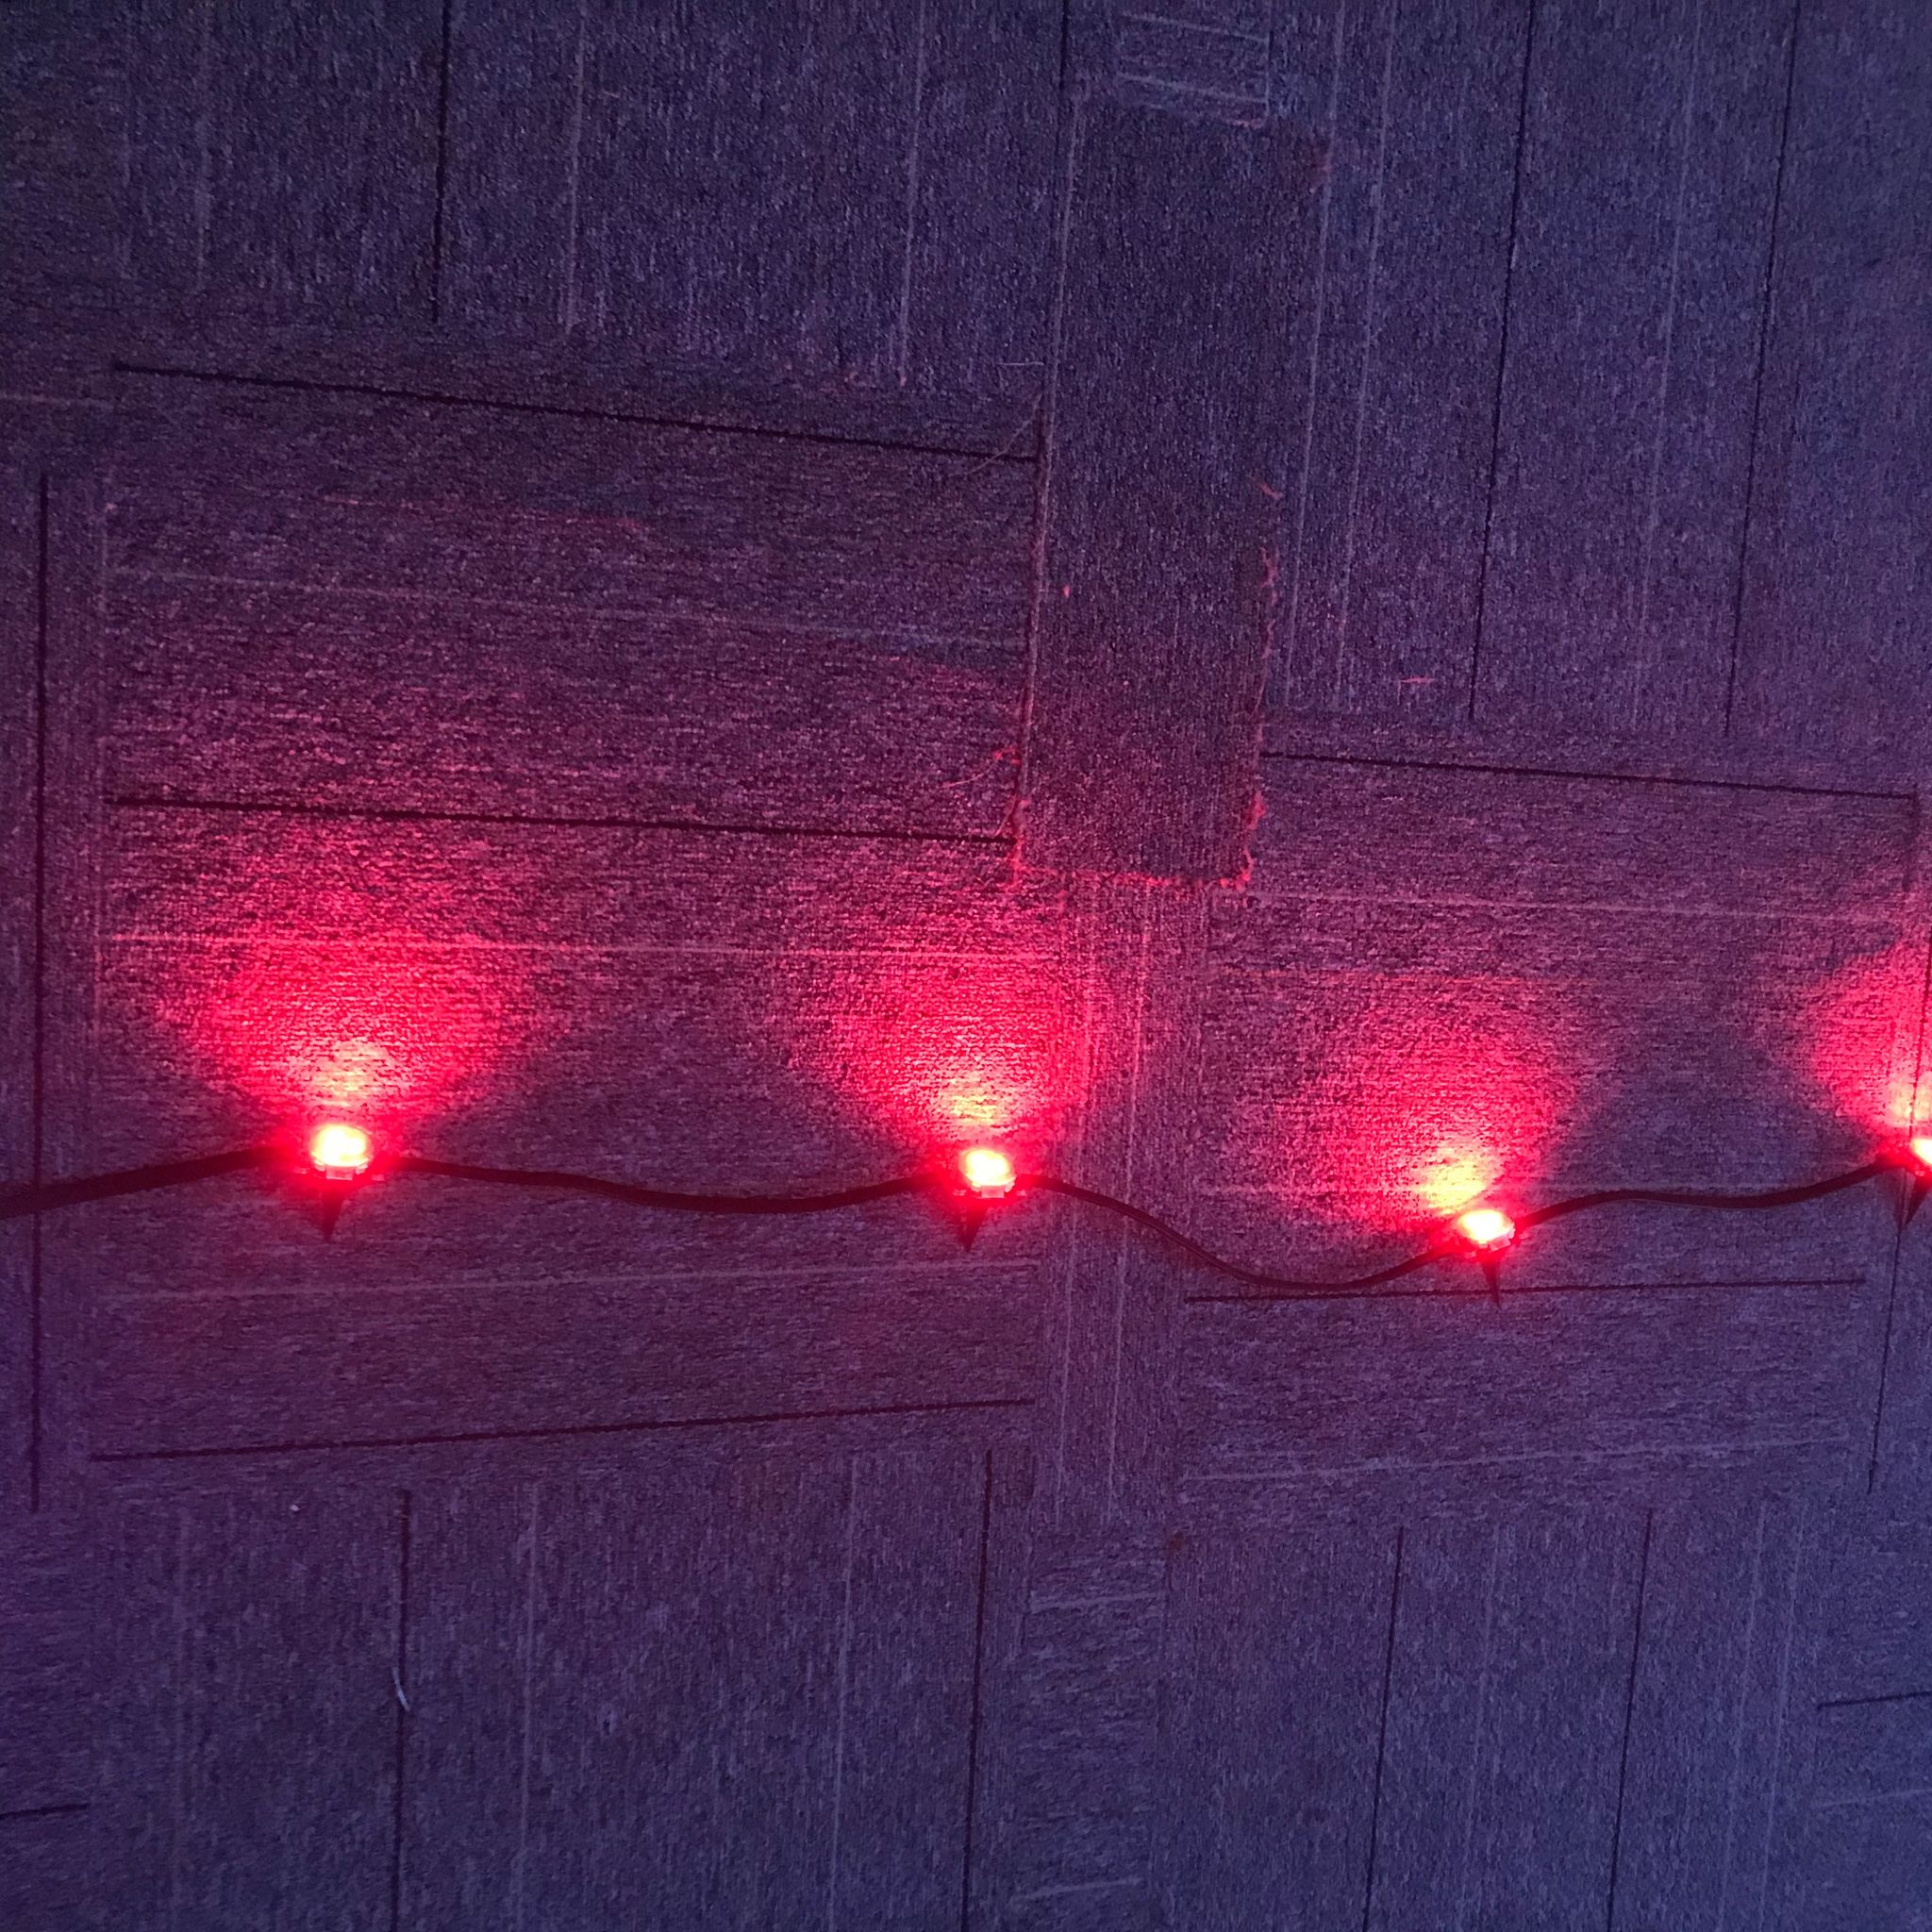 LumiStake LED Ground Lights 15ct - Brilliant Ground Illumination at Your Fingertips